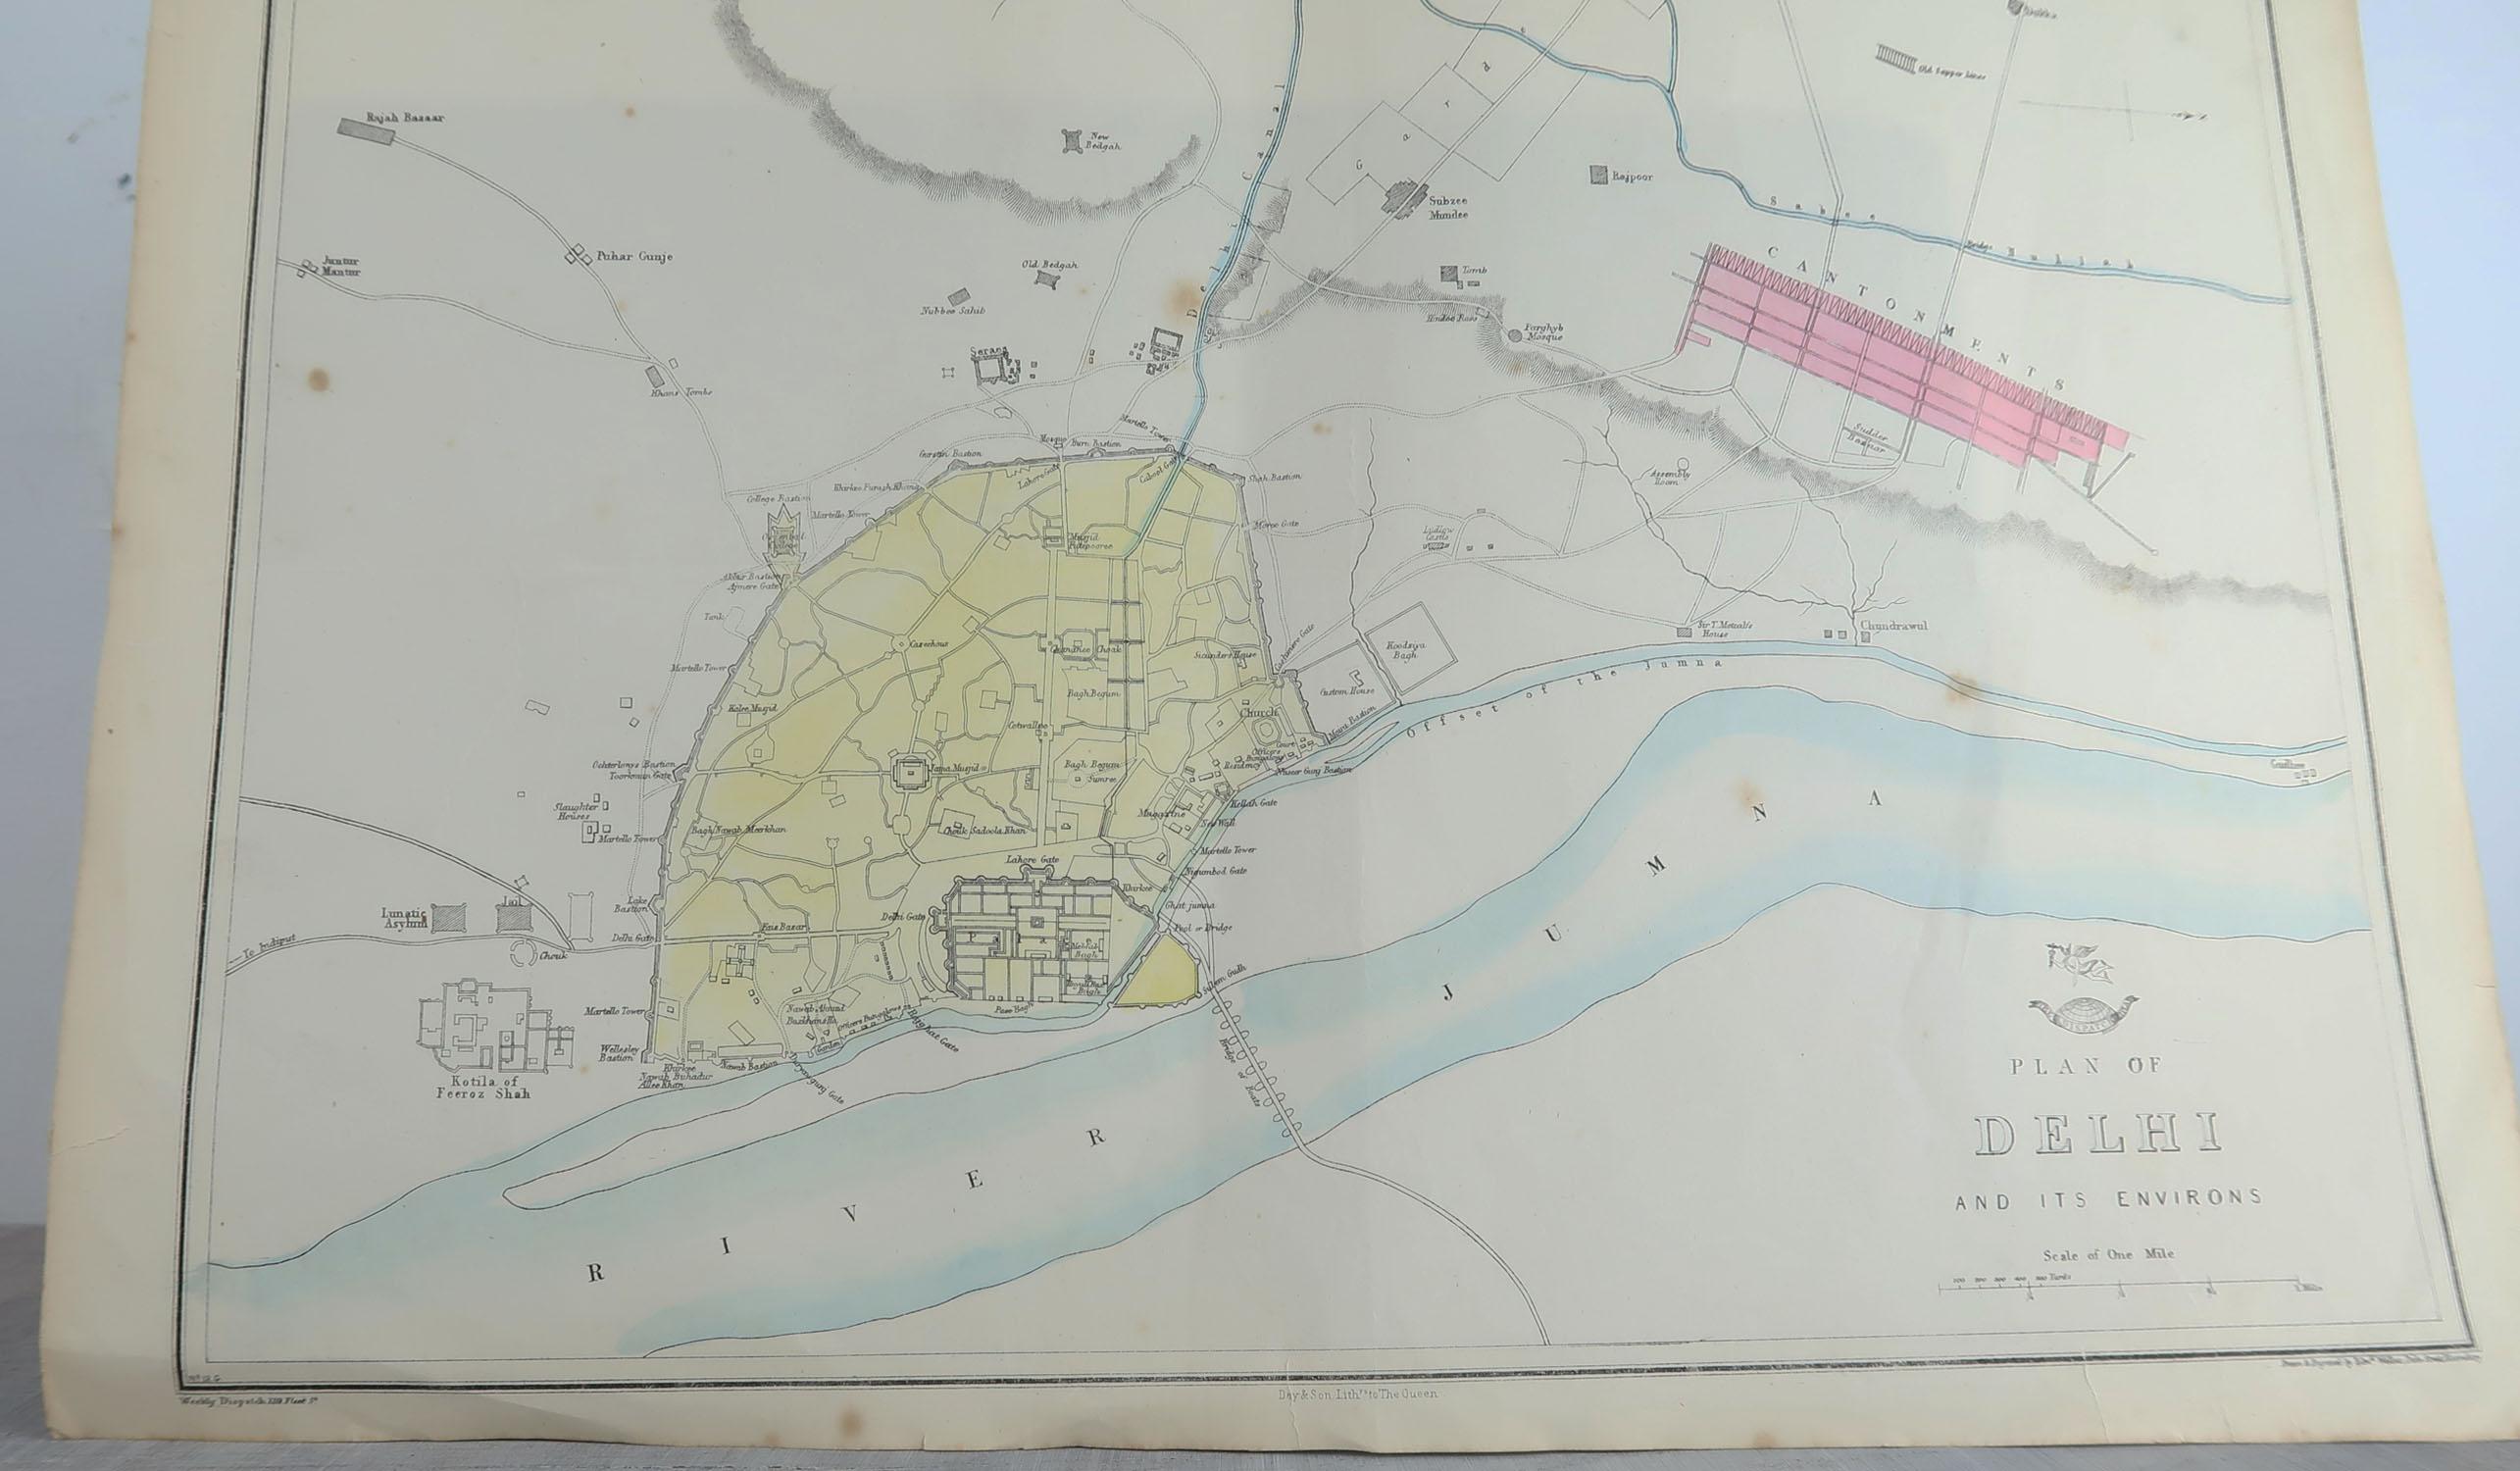 Victorian Original Antique City Plan of Delhi, India, 1861